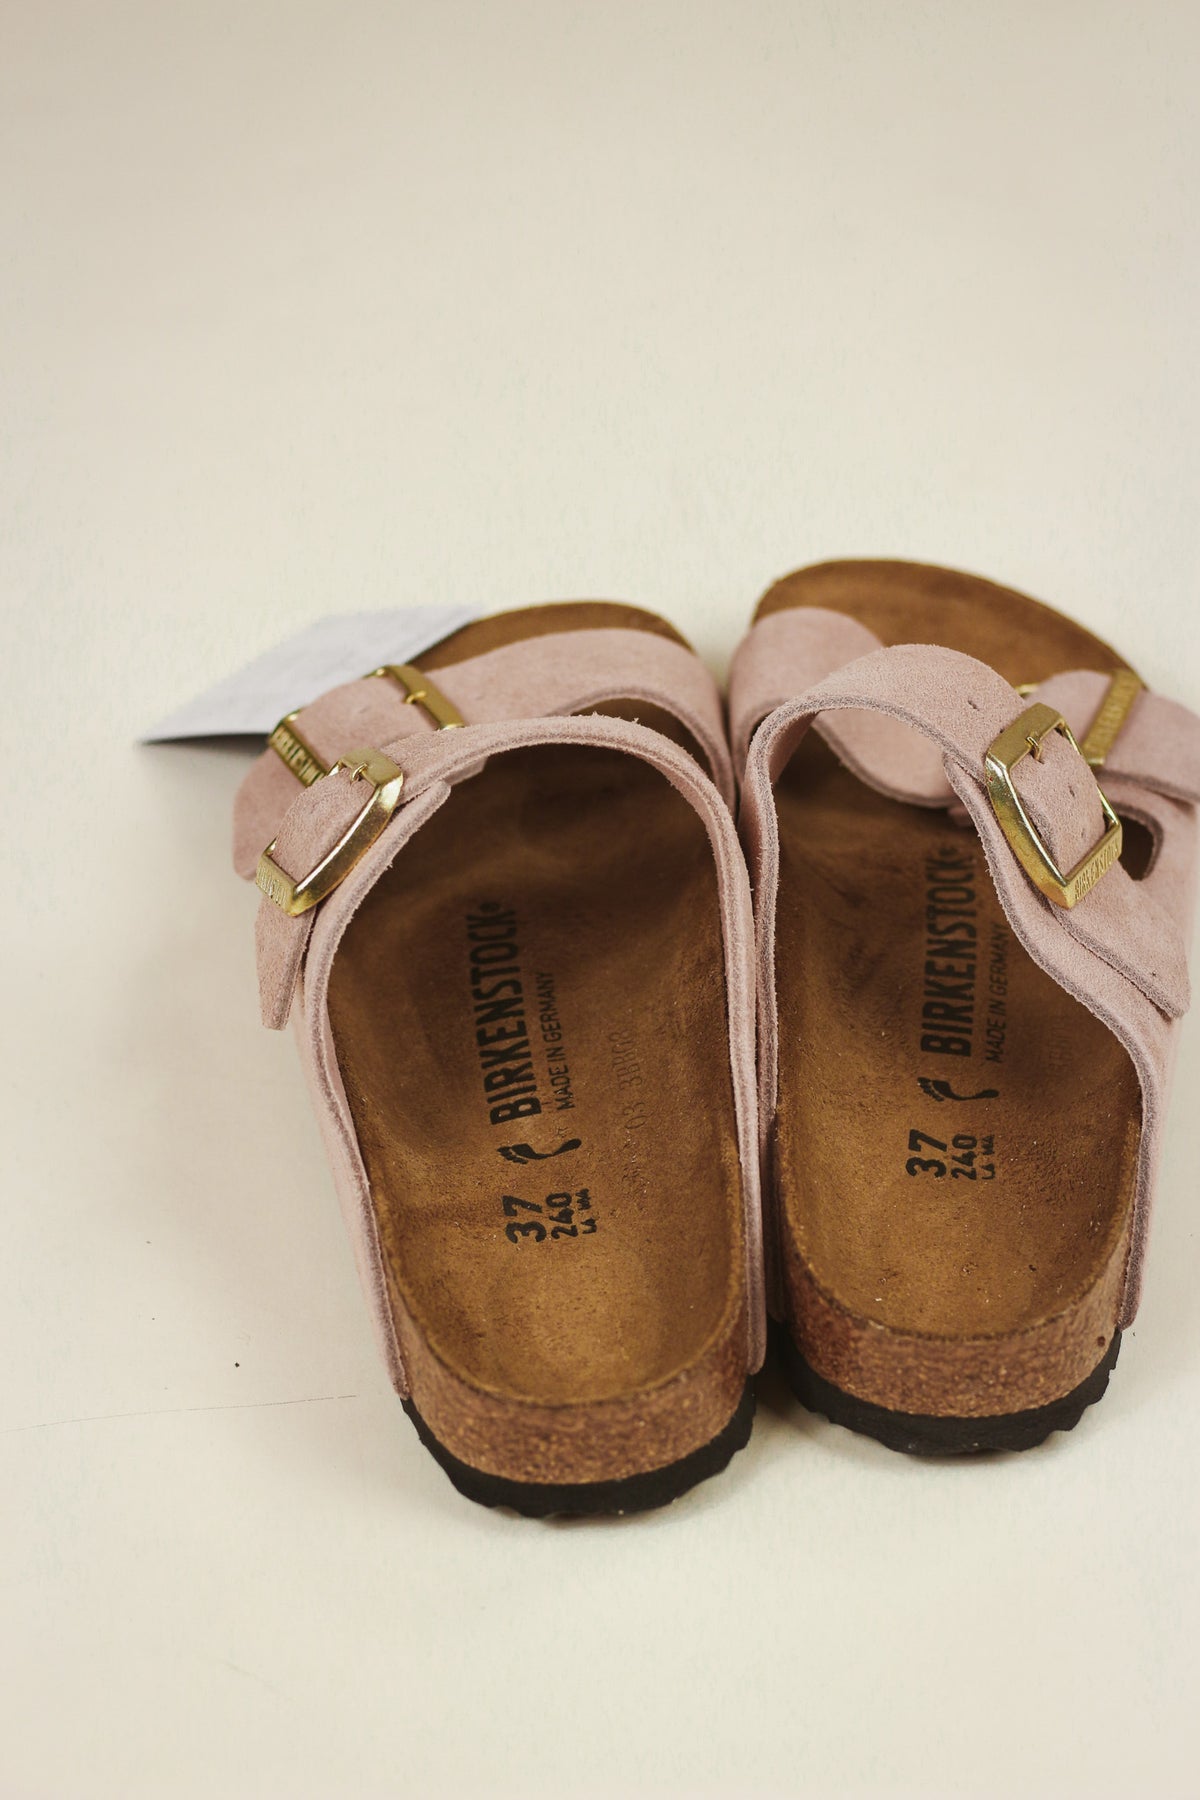 Arizona Suede Leather Sandals by Birkenstock